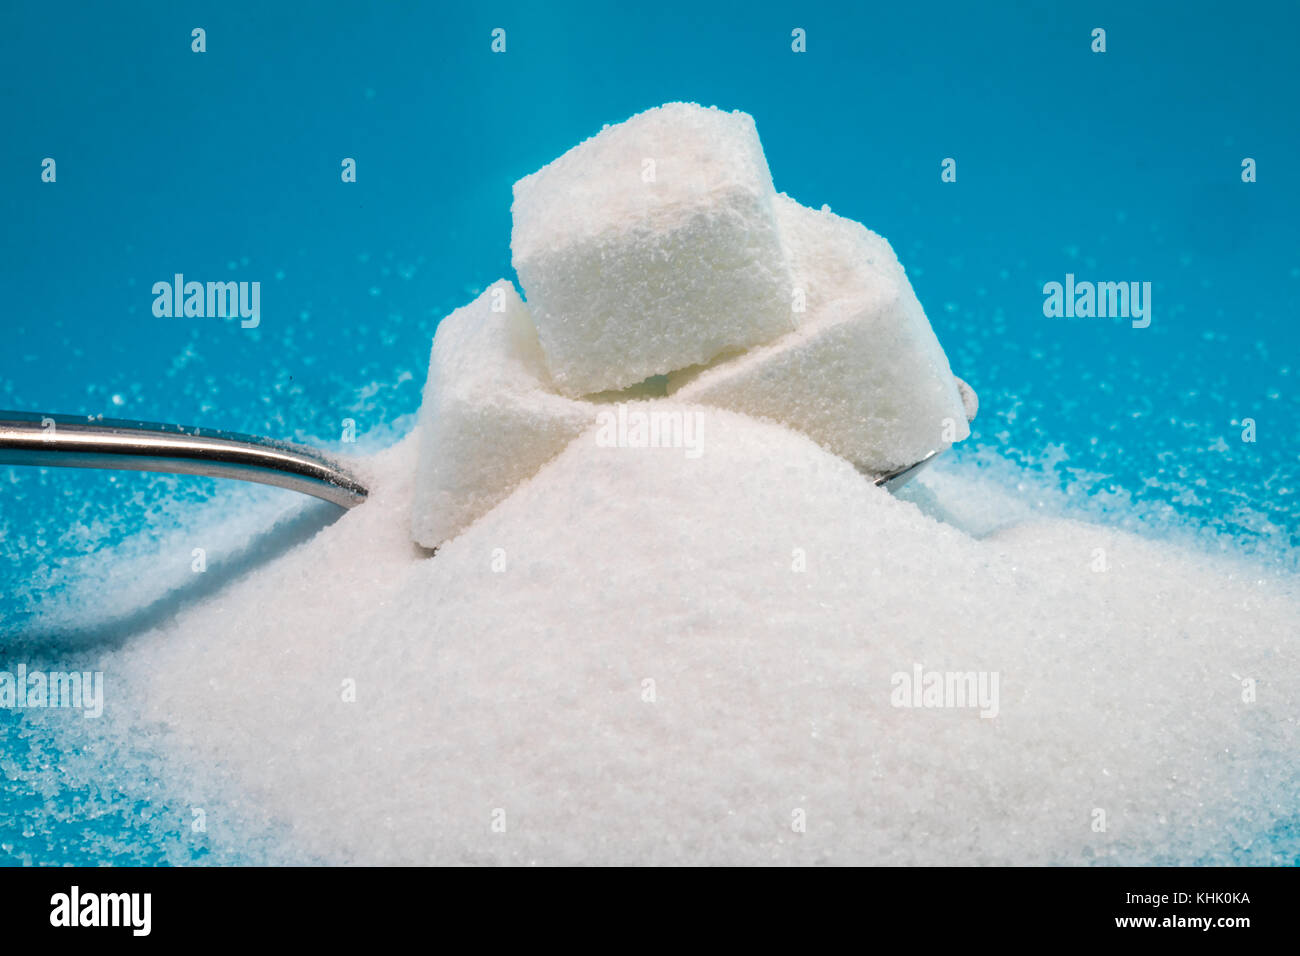 Sugar and sugar lumps on a tea spoon Stock Photo